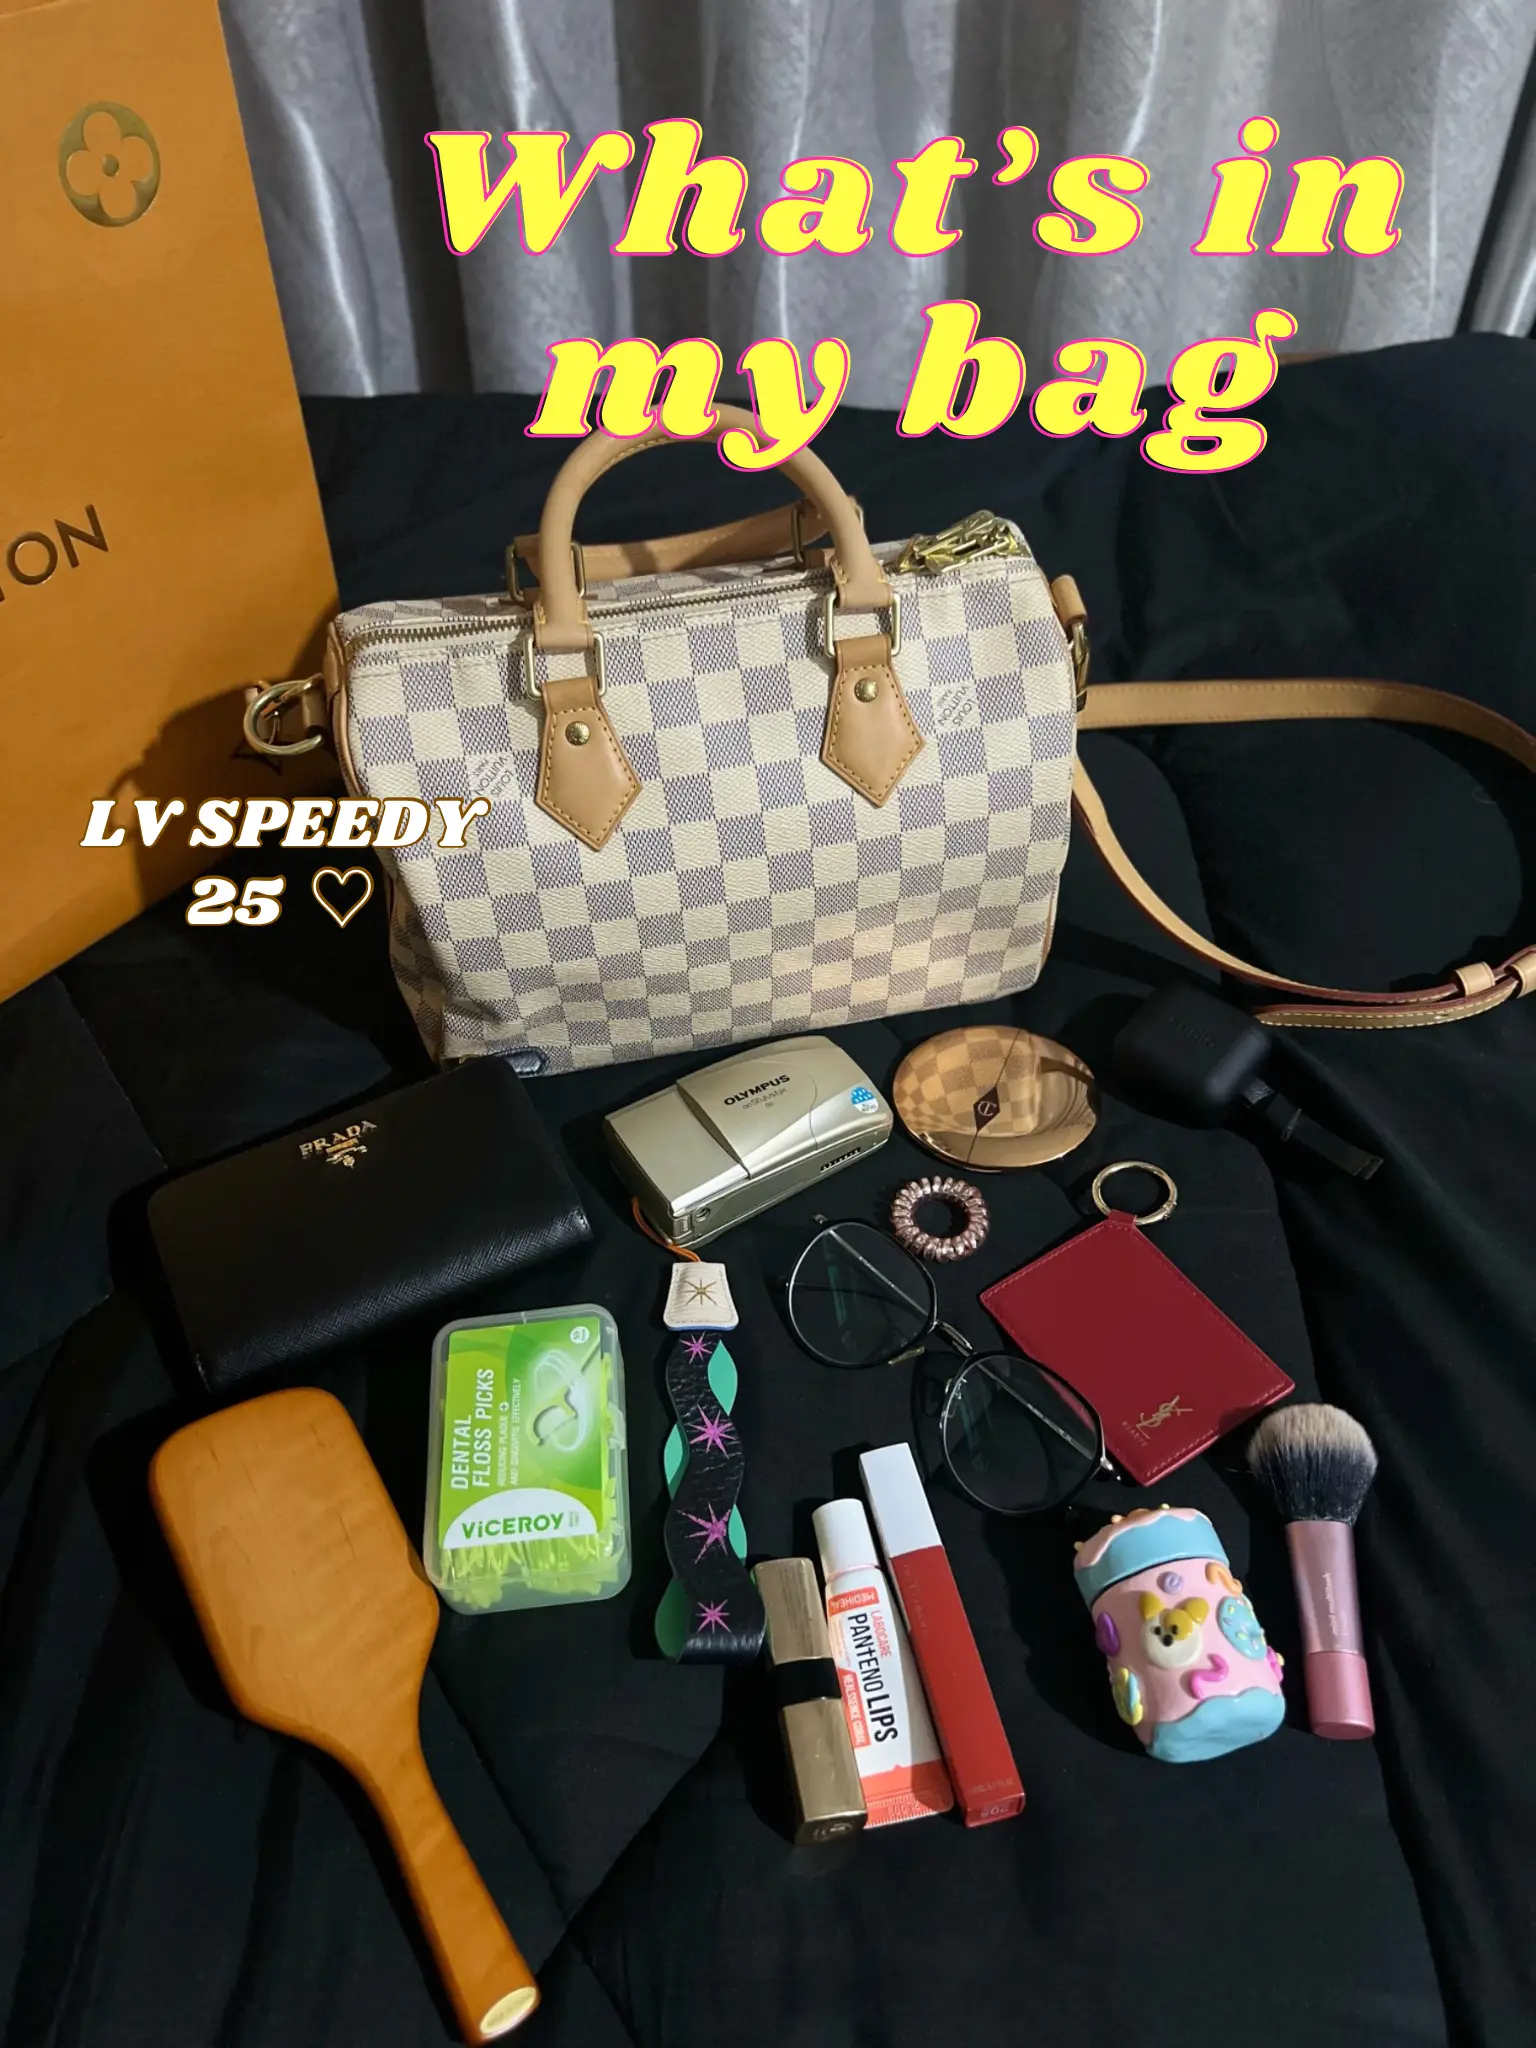 WHATS IN MY BAG ?, Louis Vuitton Speedy 30